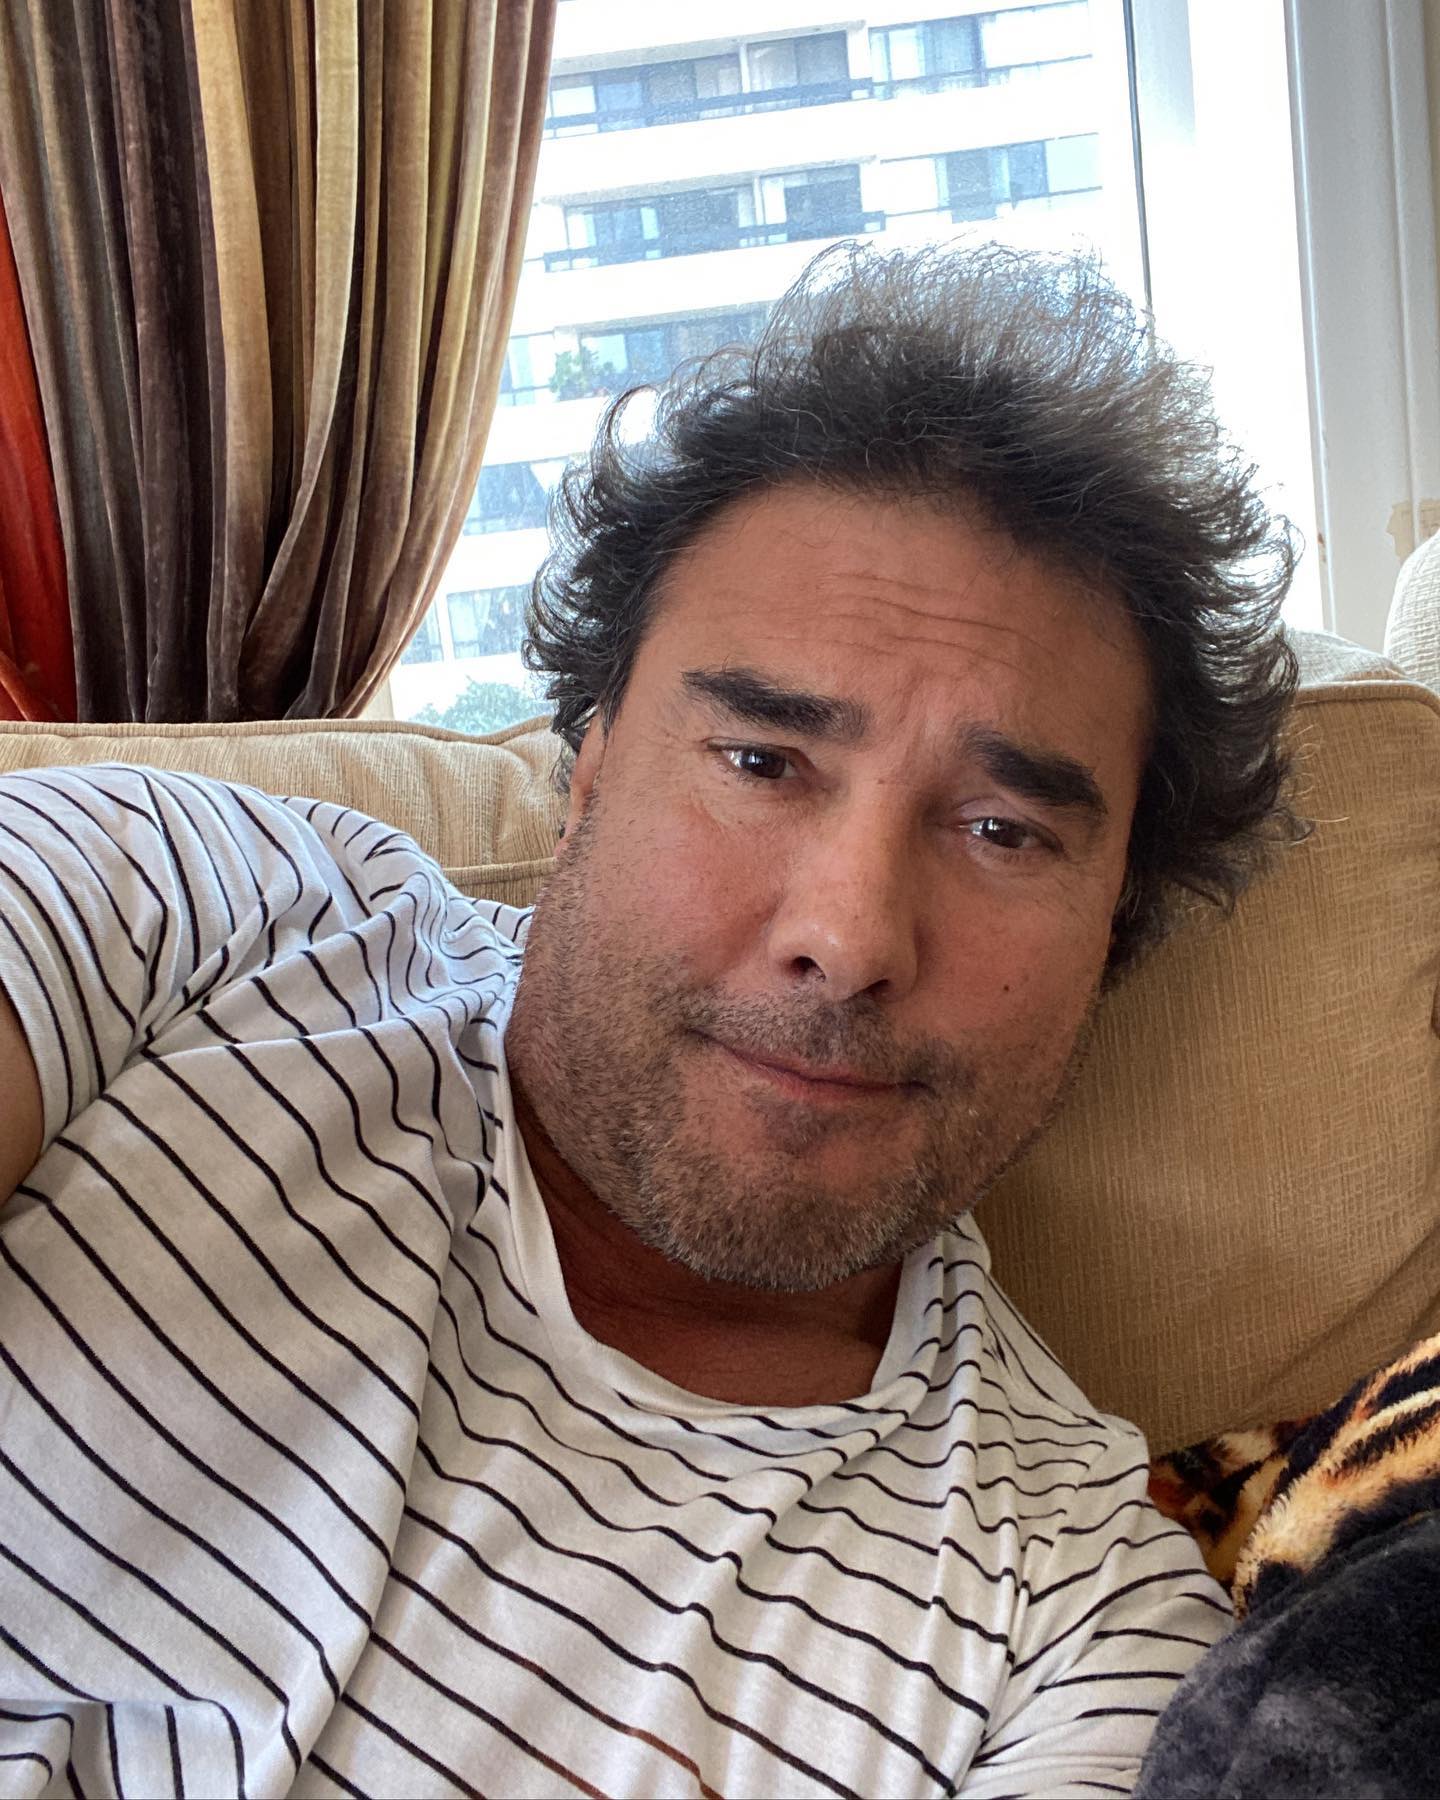 Selfie uploaded by the actor to his Instagram account.  Instagram: @eduardoyanezofc